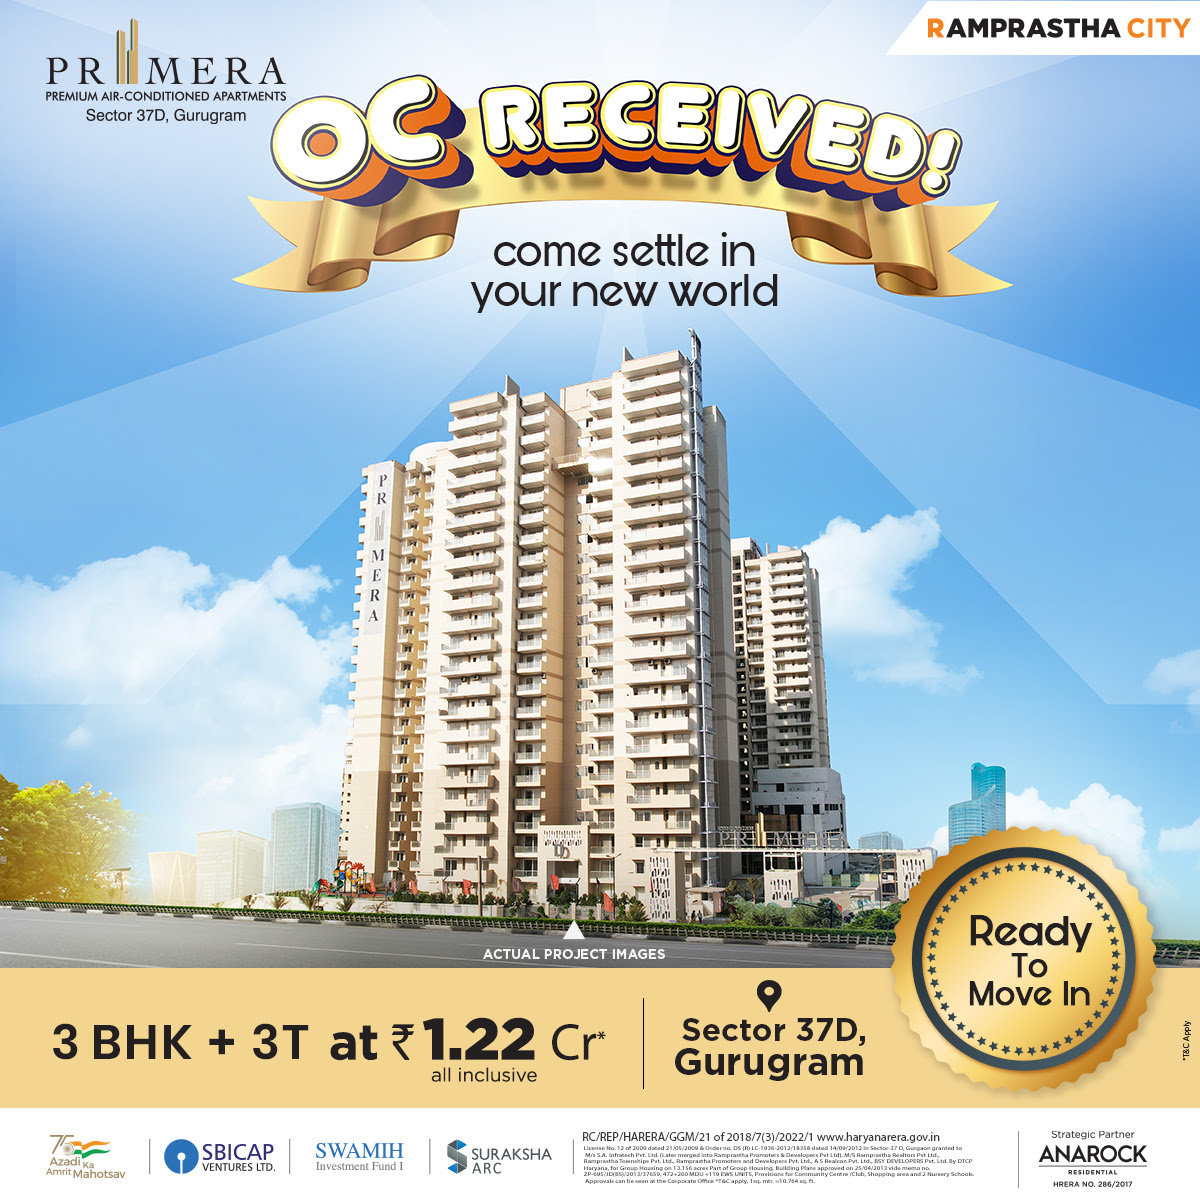 Premium 3BHK + 3T home Rs 1.22 Cr at Ramprastha Primera, in Sector 37D, Gurgaon Update